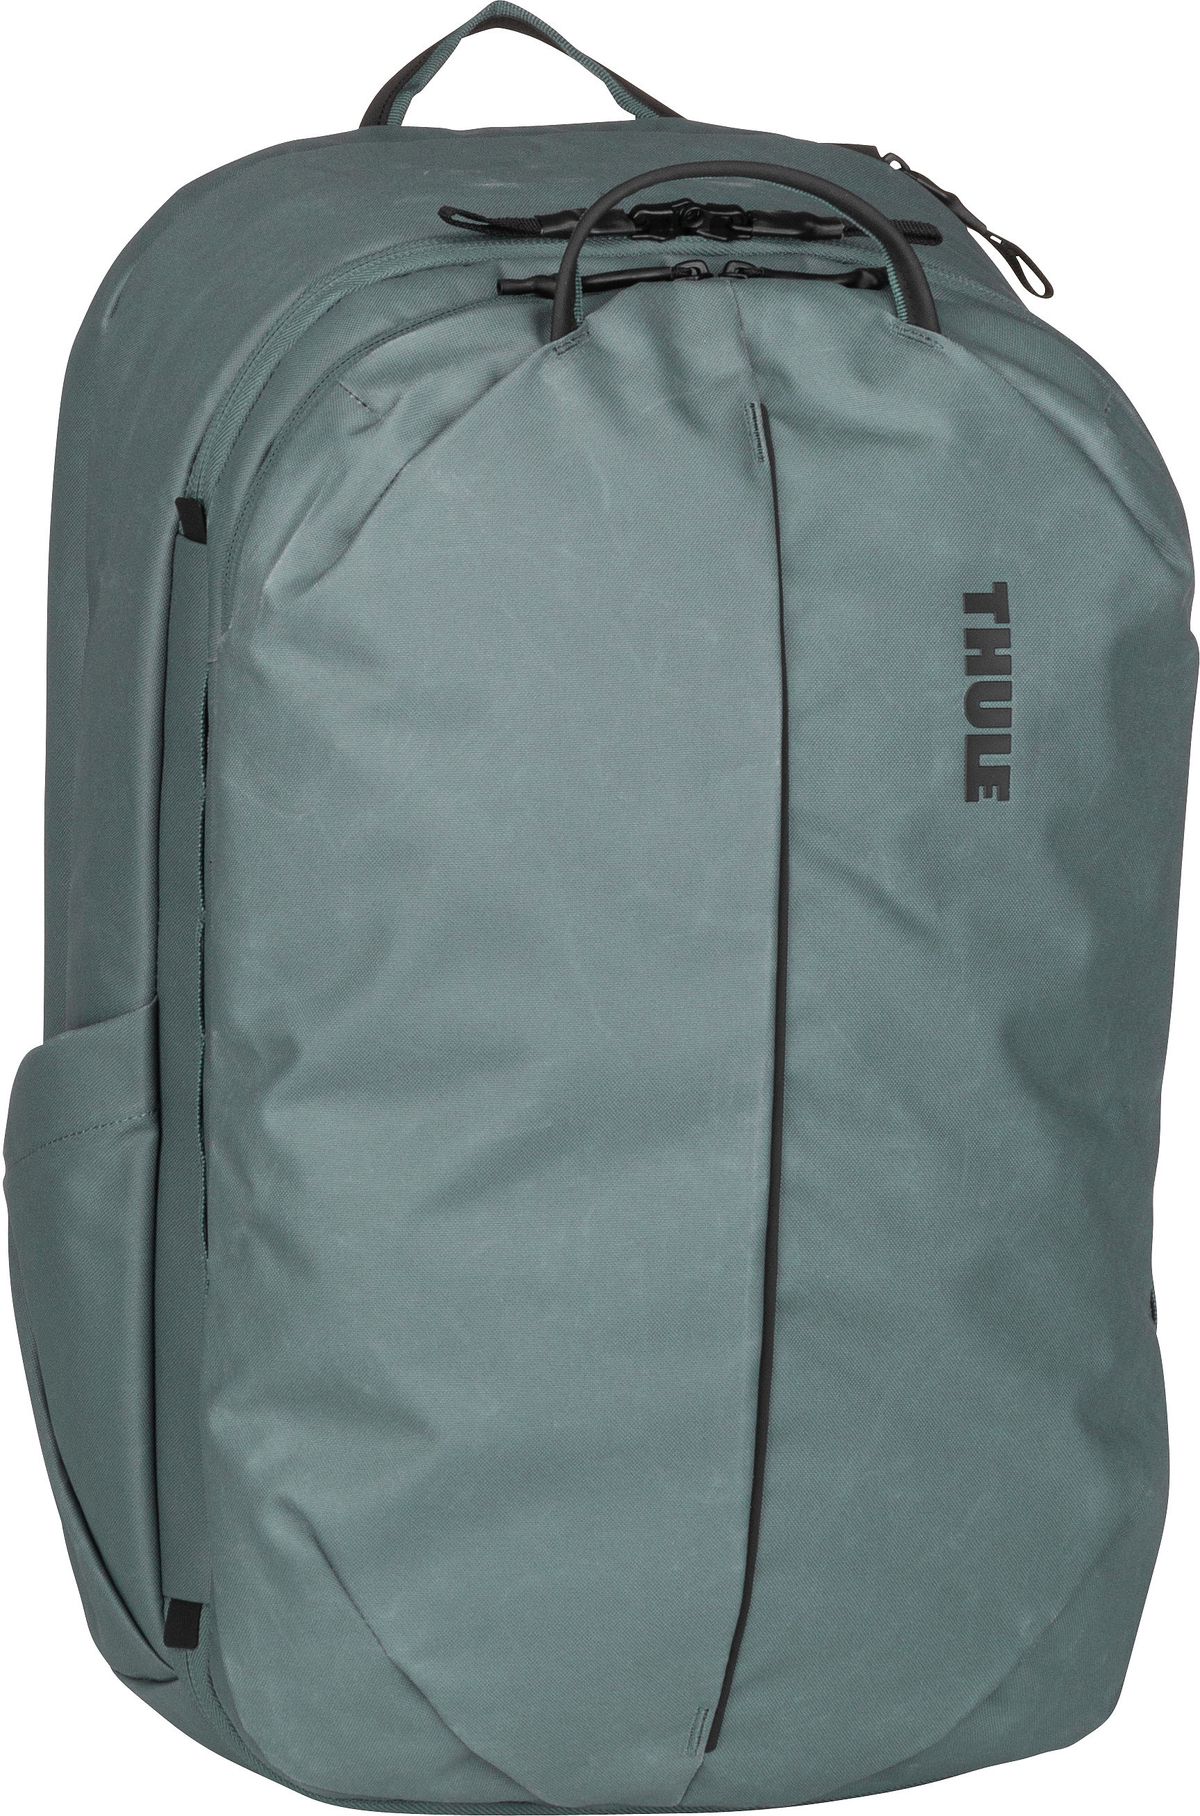 Thule Aion Backpack 40L  in Grau (40 Liter), Reiserucksack von Thule